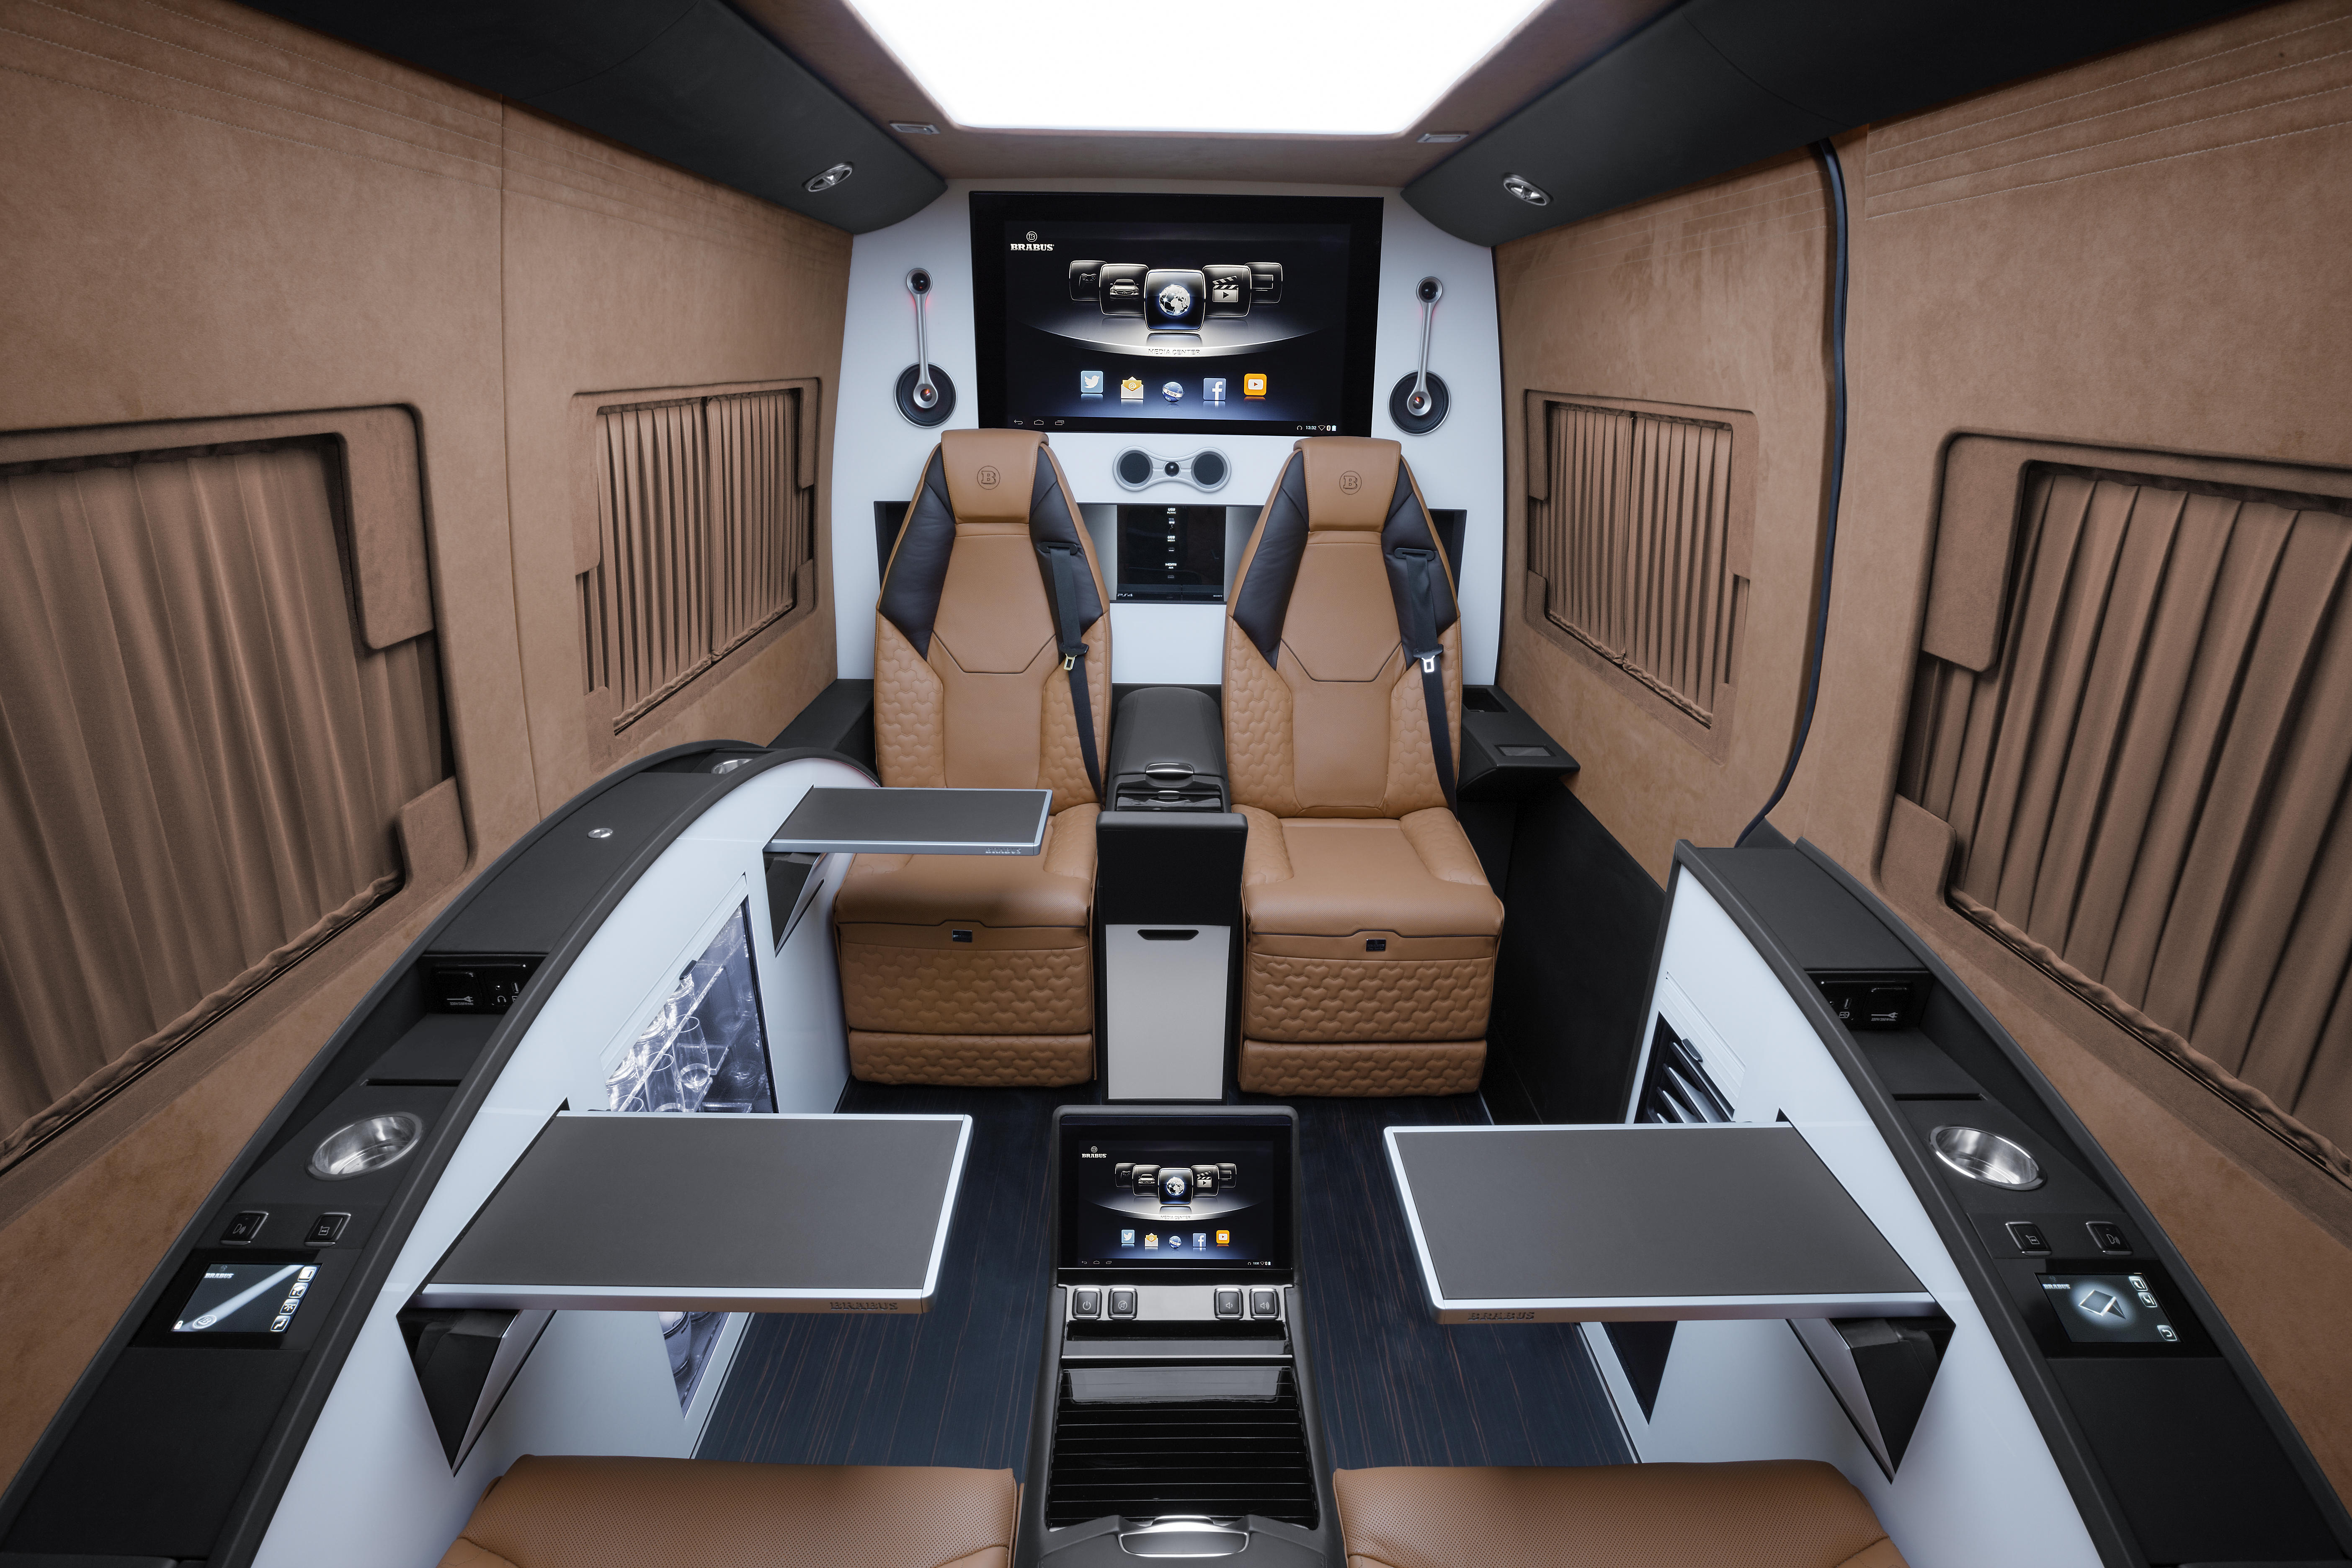 717350 descargar imagen vehículos, mercedes benz sprinter, coche, interior, camioneta: fondos de pantalla y protectores de pantalla gratis